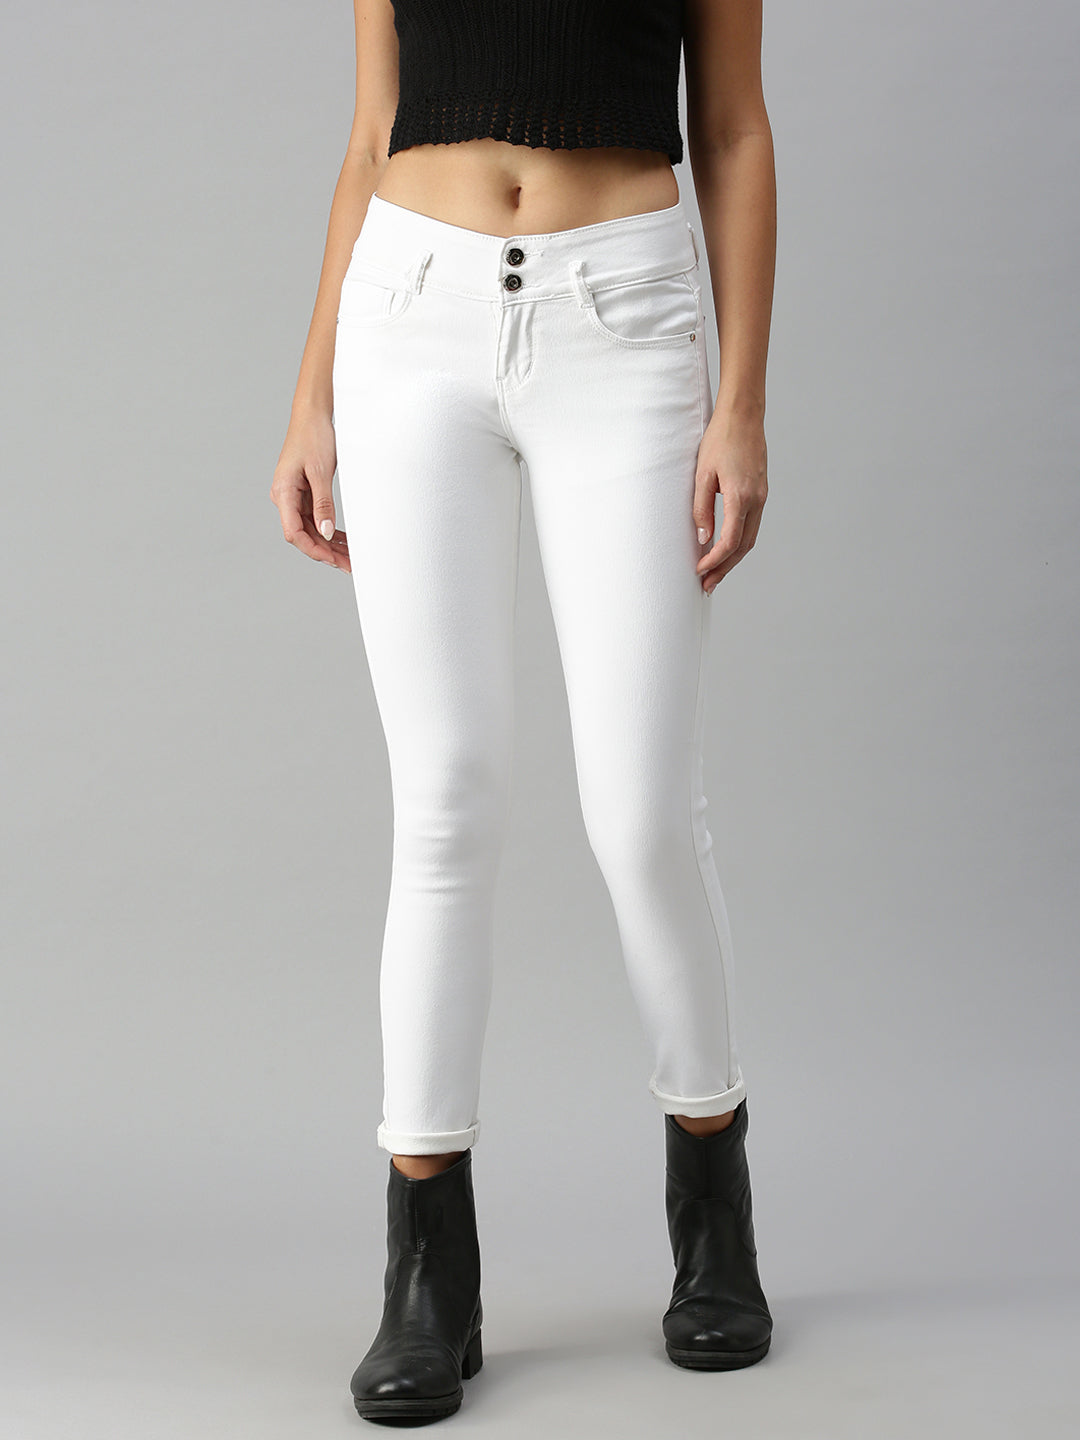 Women's White Solid Denim Skinny Jeans